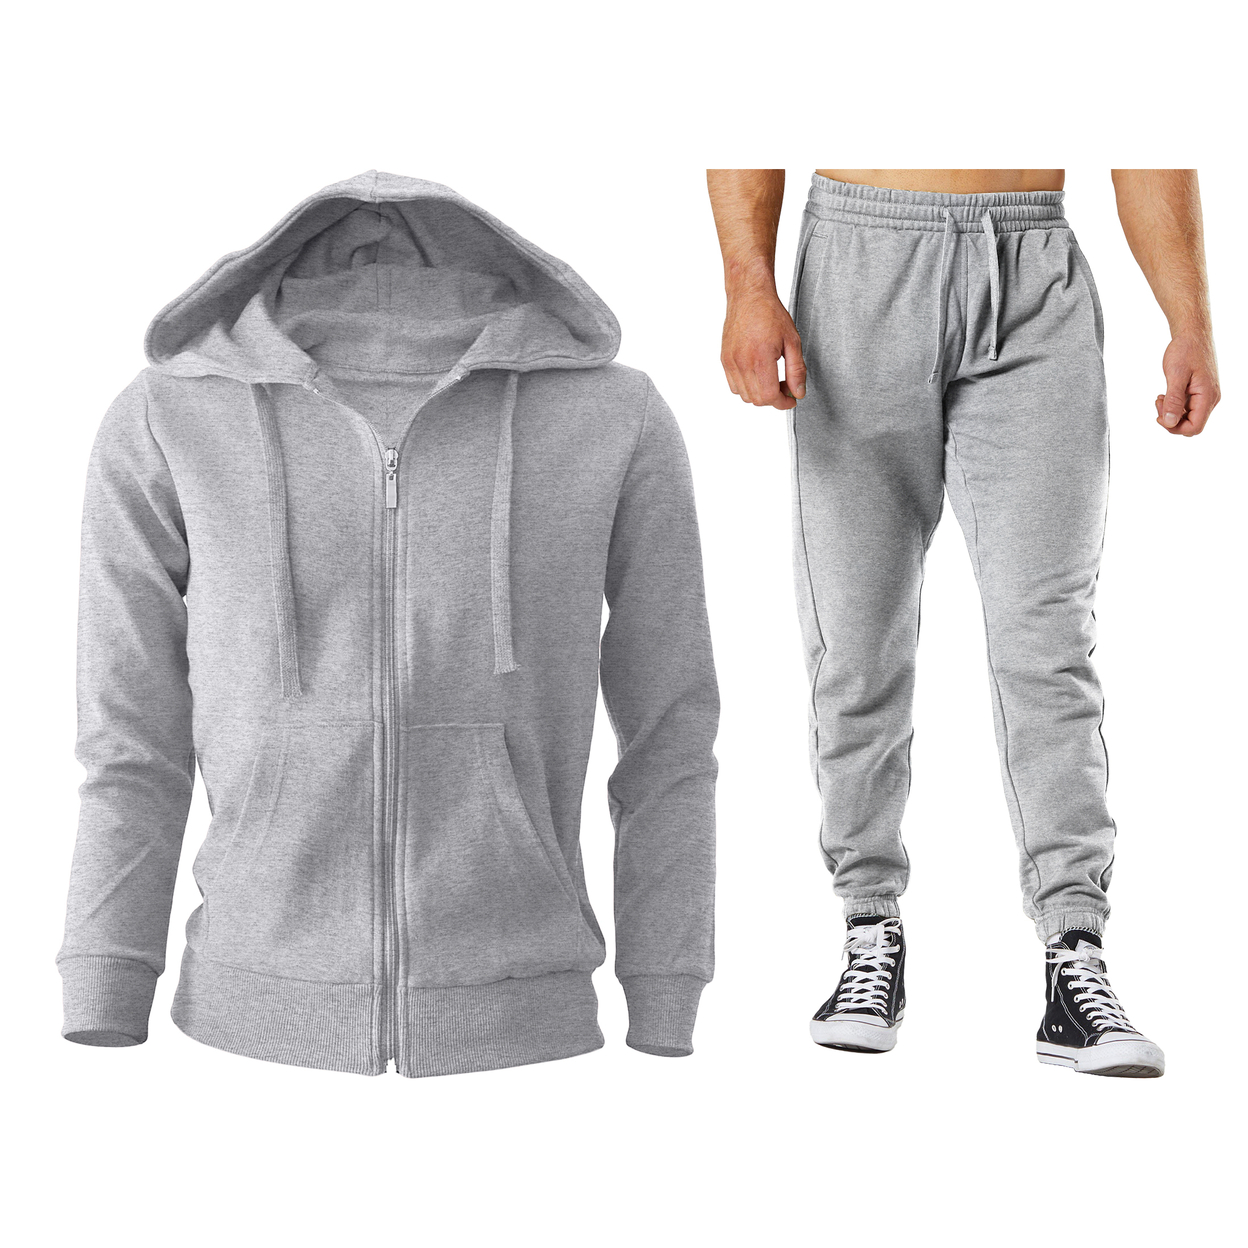 2/4-Piece: Men's Winter Warm Cozy Athletic Multi-Pockets BIG & TALL Sweatsuit Set - Navy, 2, 3xl